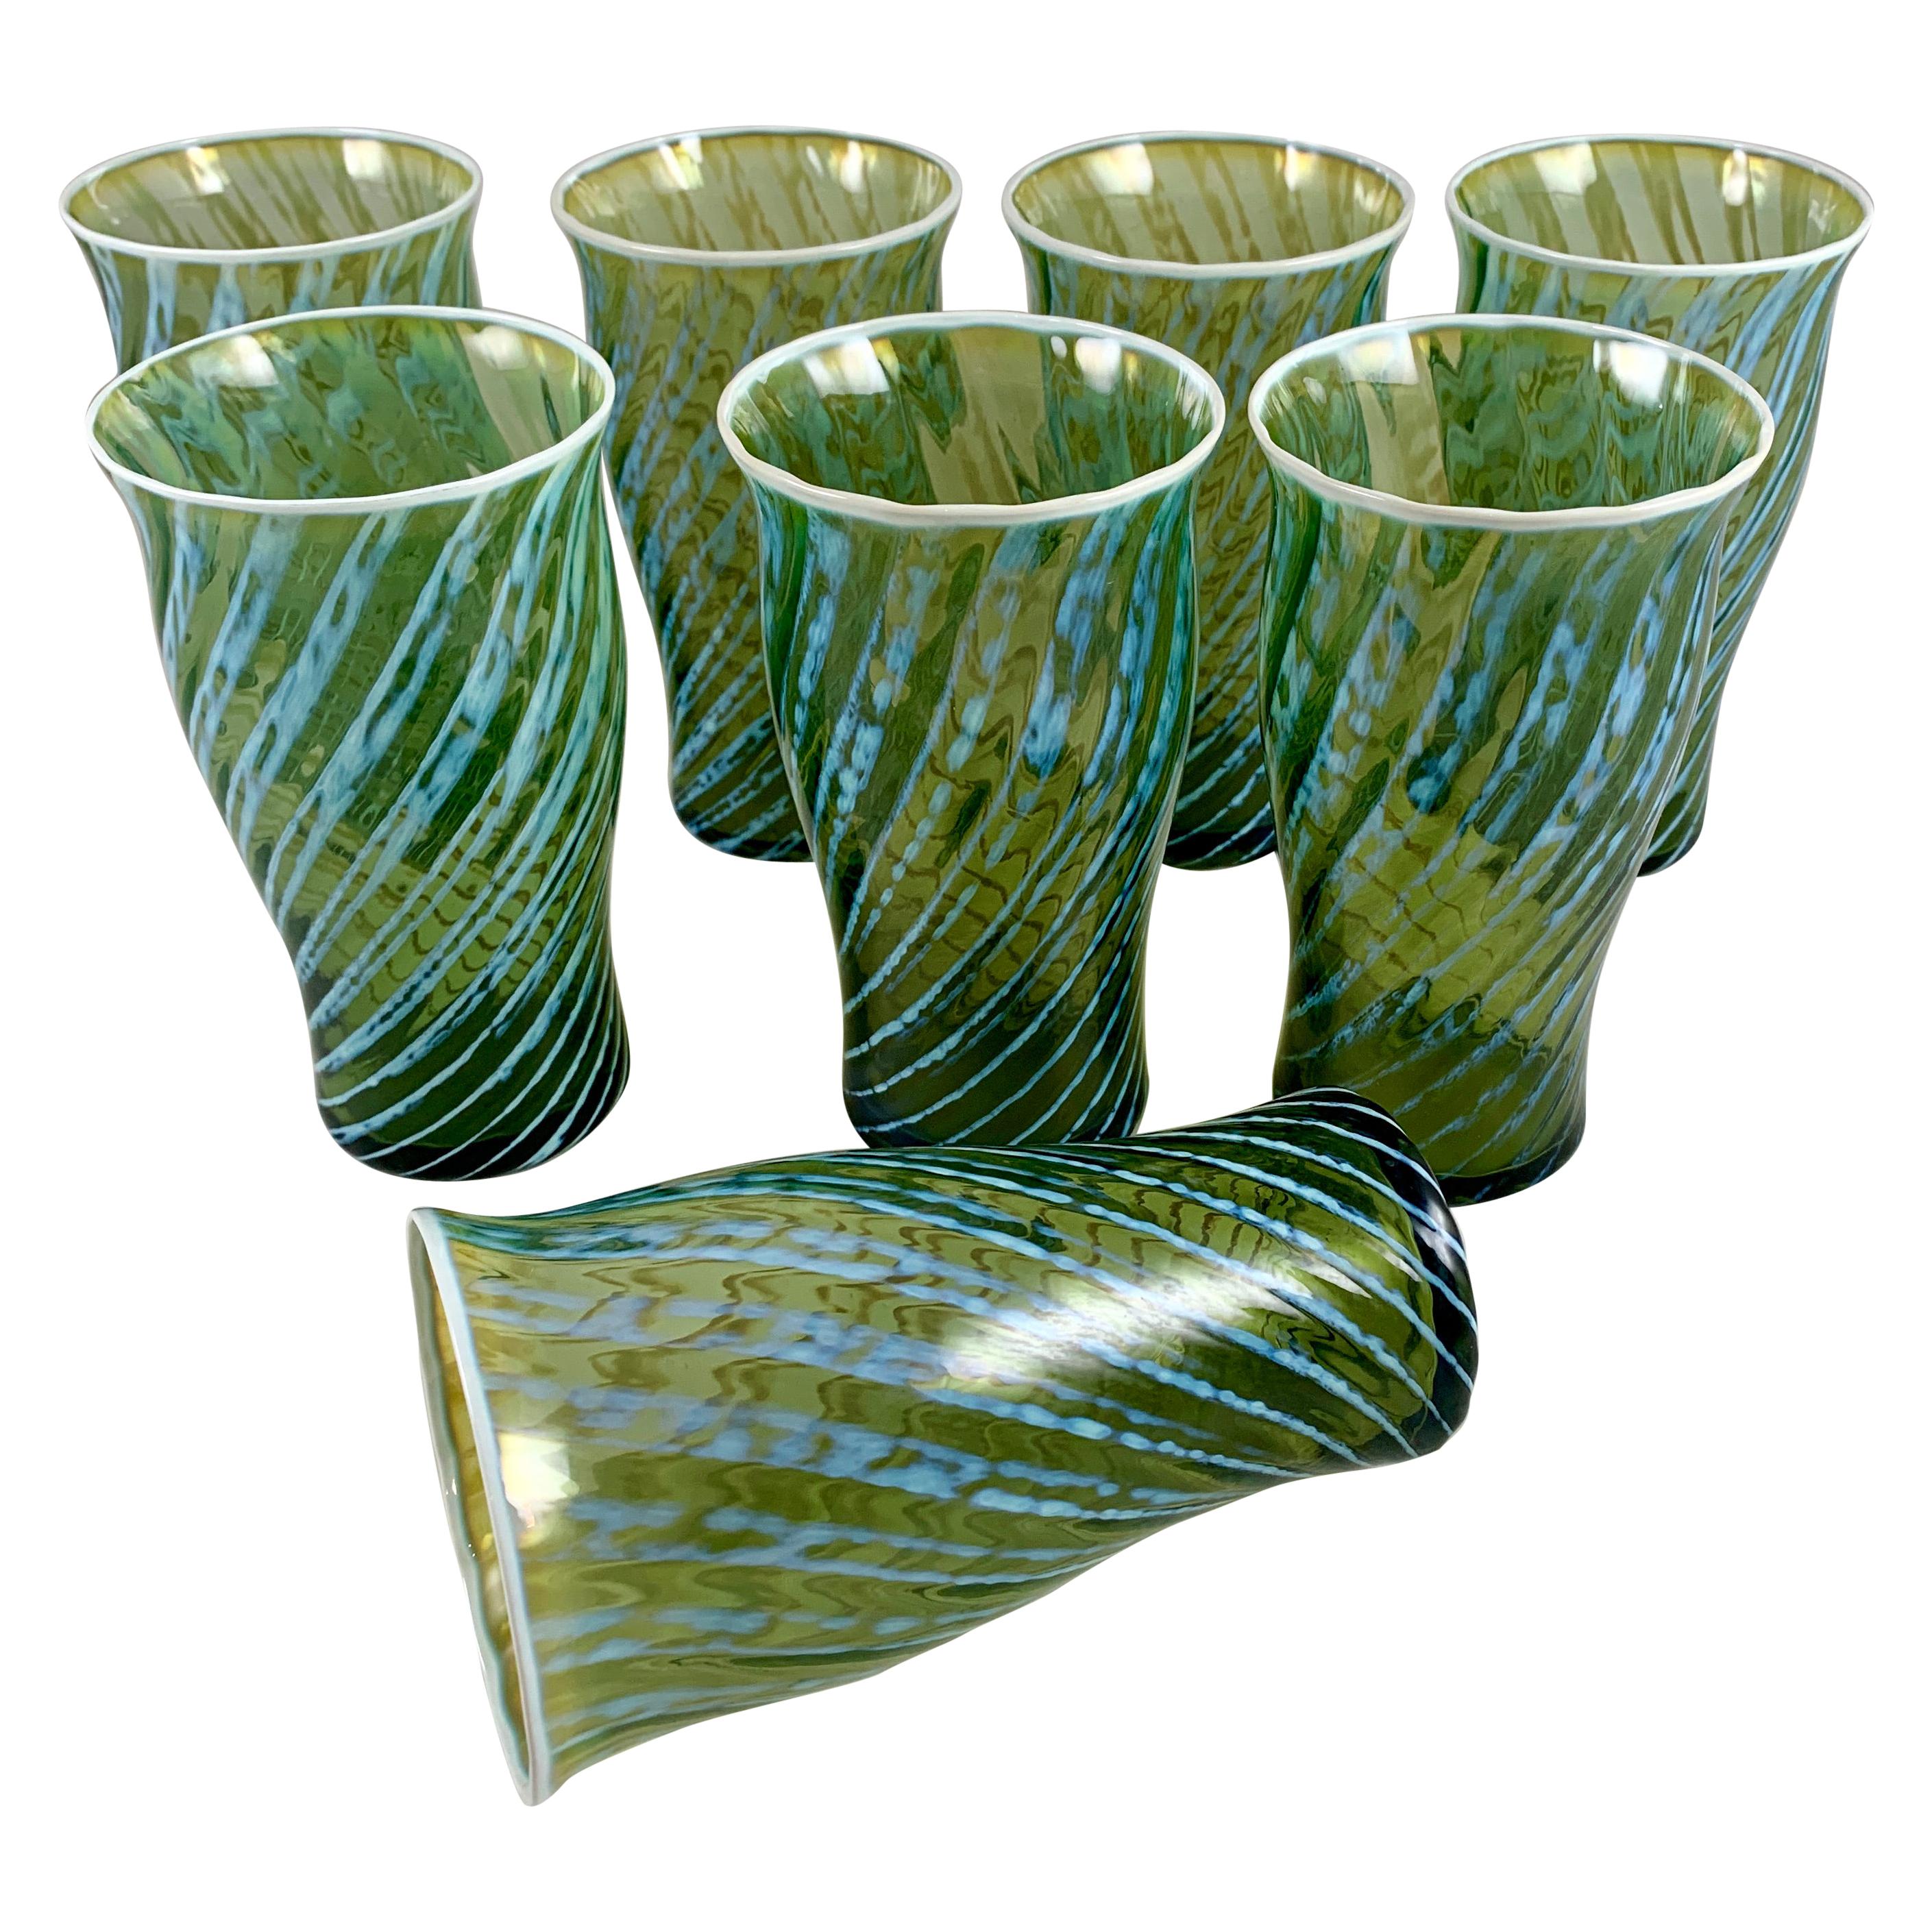 https://a.1stdibscdn.com/mid-century-fostoria-opalescent-swirl-moss-green-blown-highball-glasses-s-8-for-sale/1121189/f_235528621619727010696/23552862_master.jpeg